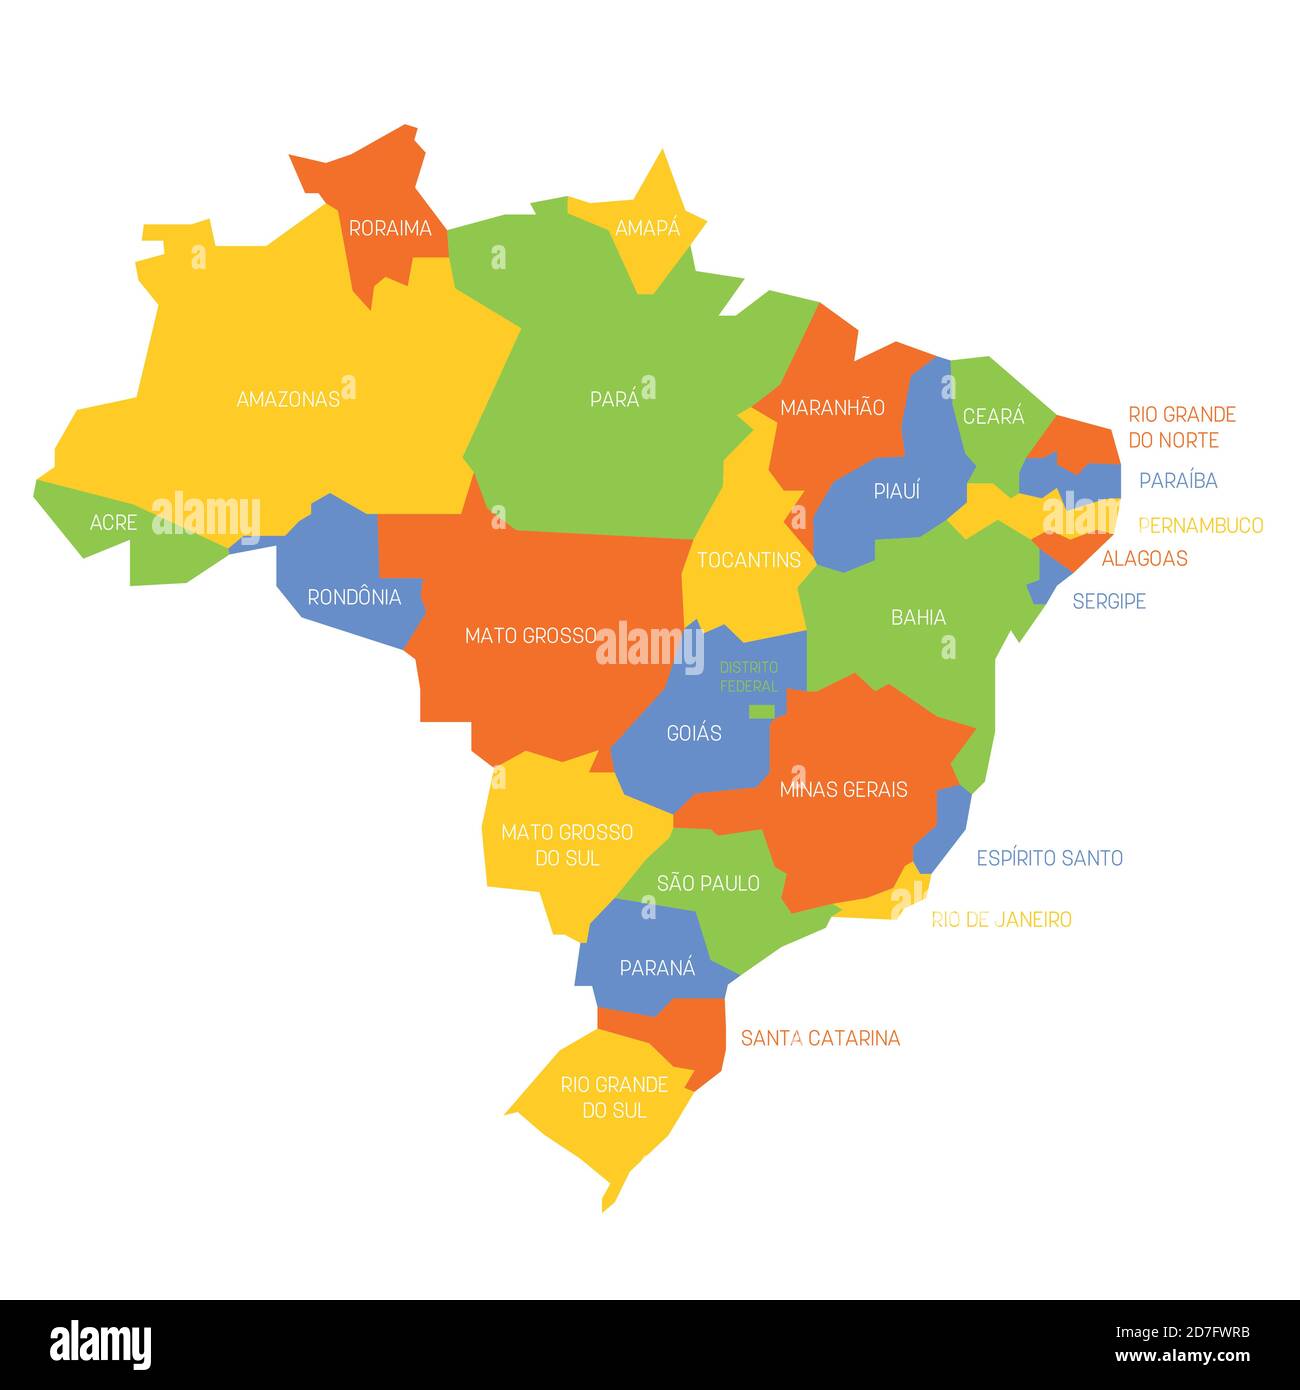 Premium Vector  Rondonia map state of brazil vector illustration